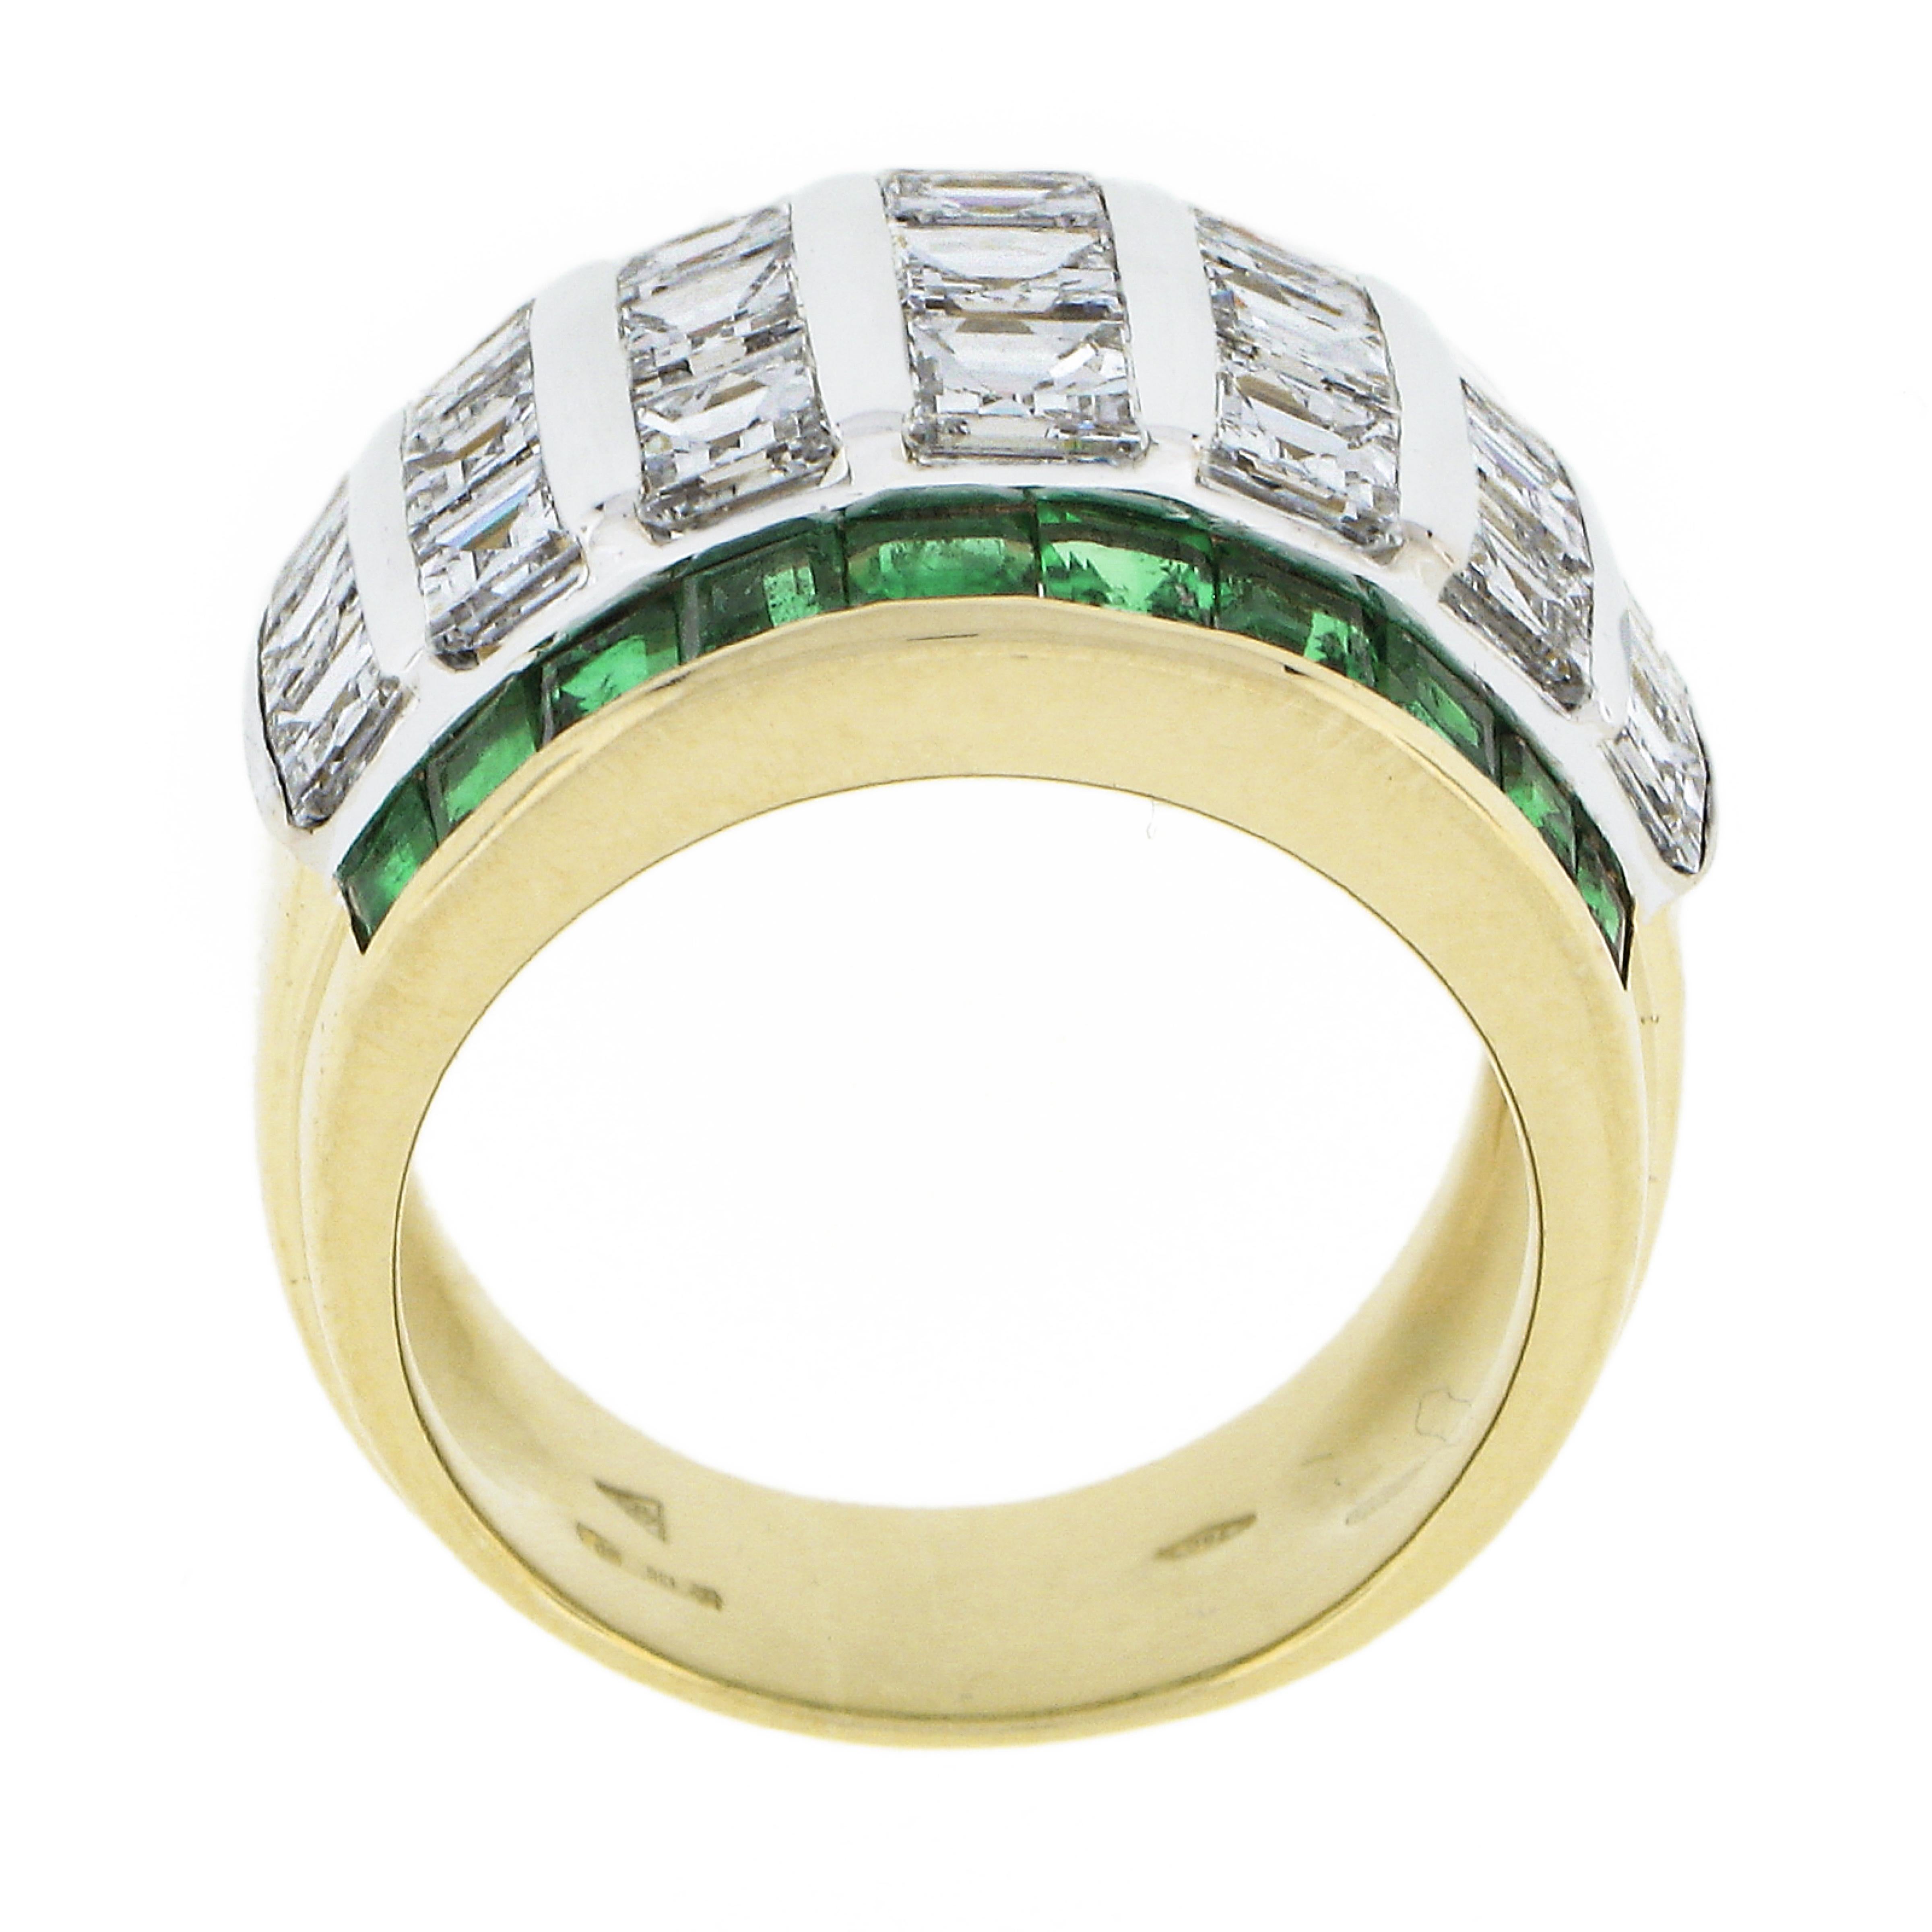 Stefan Hafner 18k Gold 7.4ct Square Step Cut Diamond Emerald Statement Band Ring 1